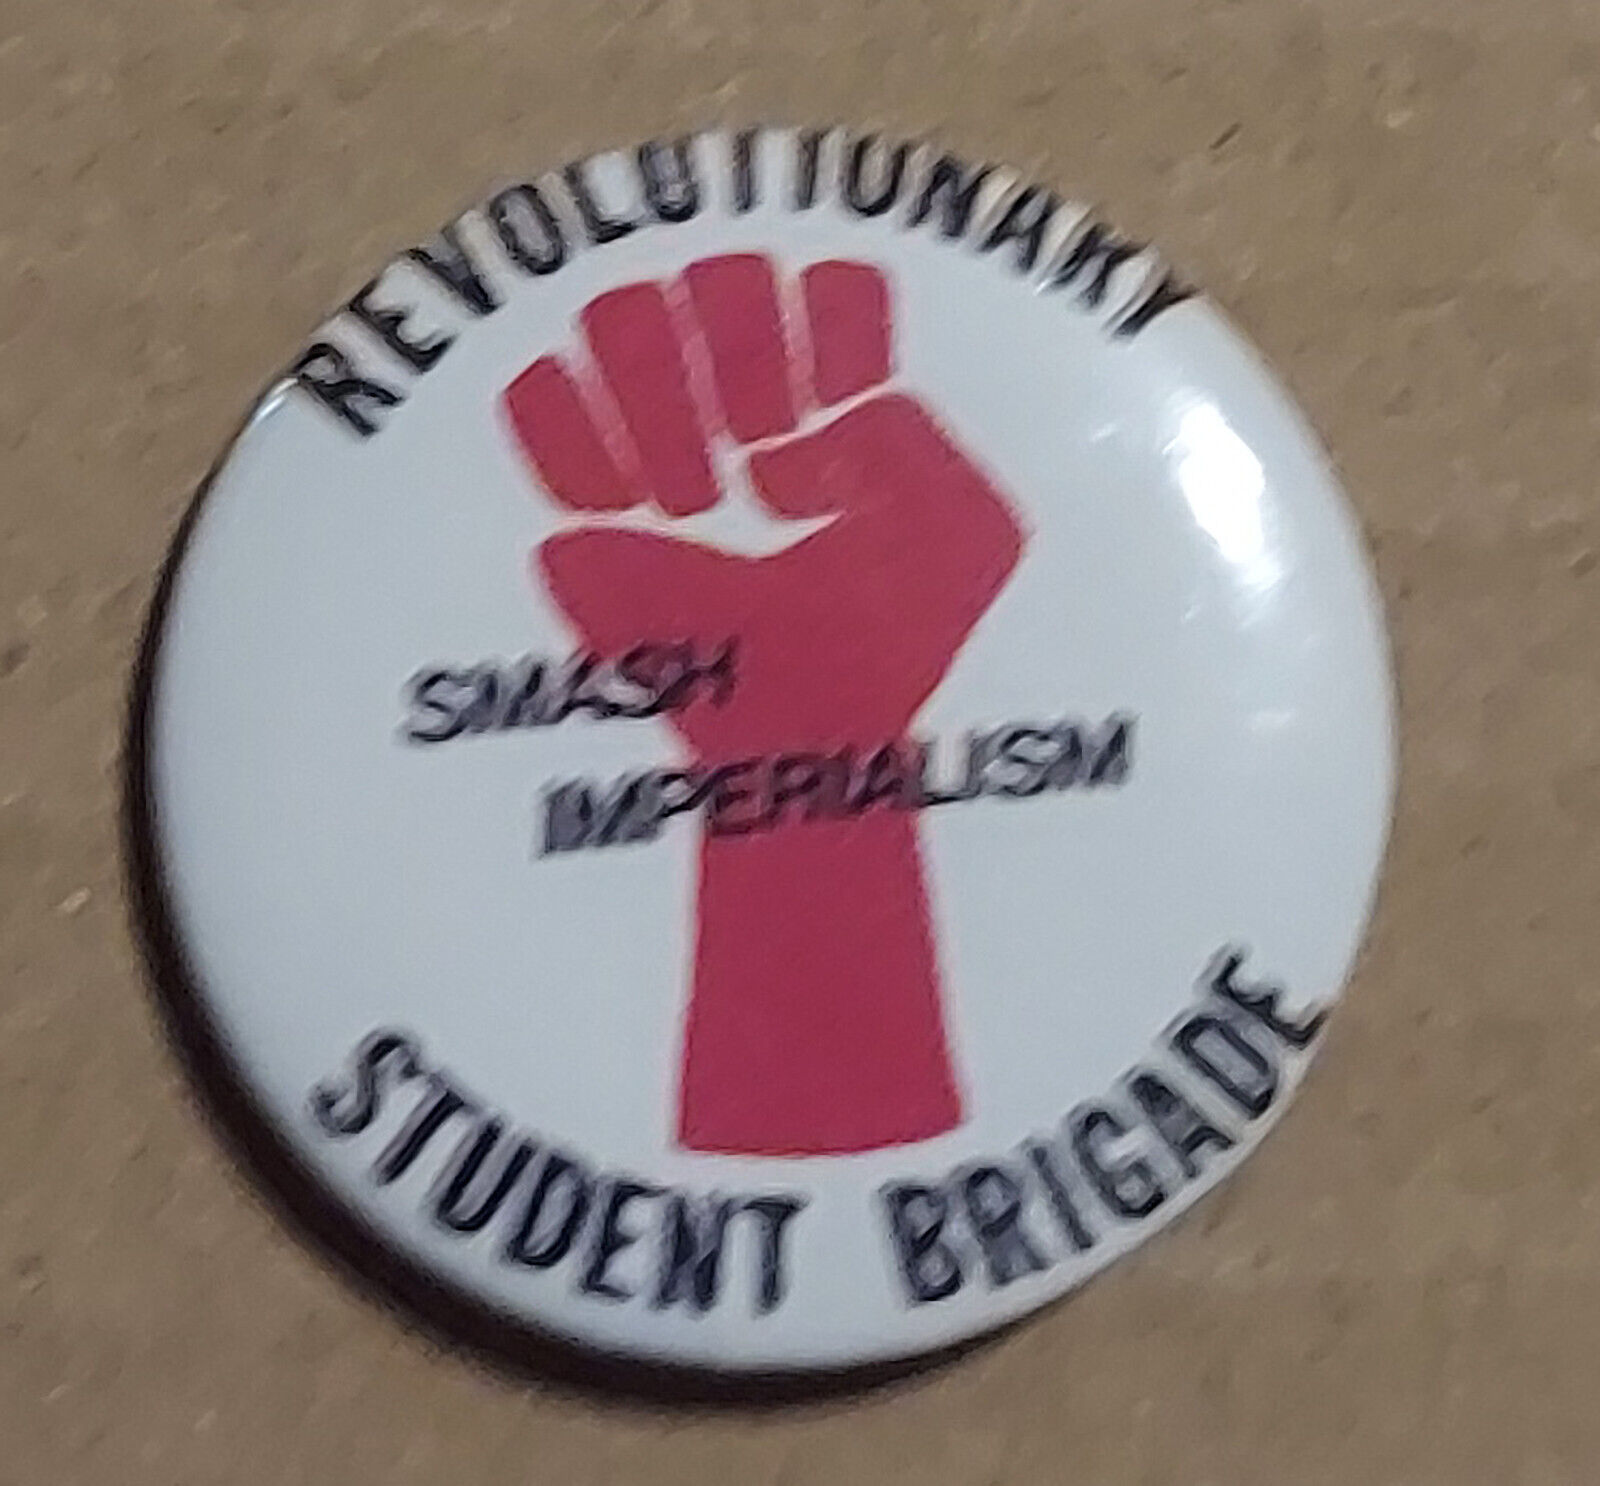 Retro Repro Revolutionary Student Brigade Smash Imperialism anti war pinback